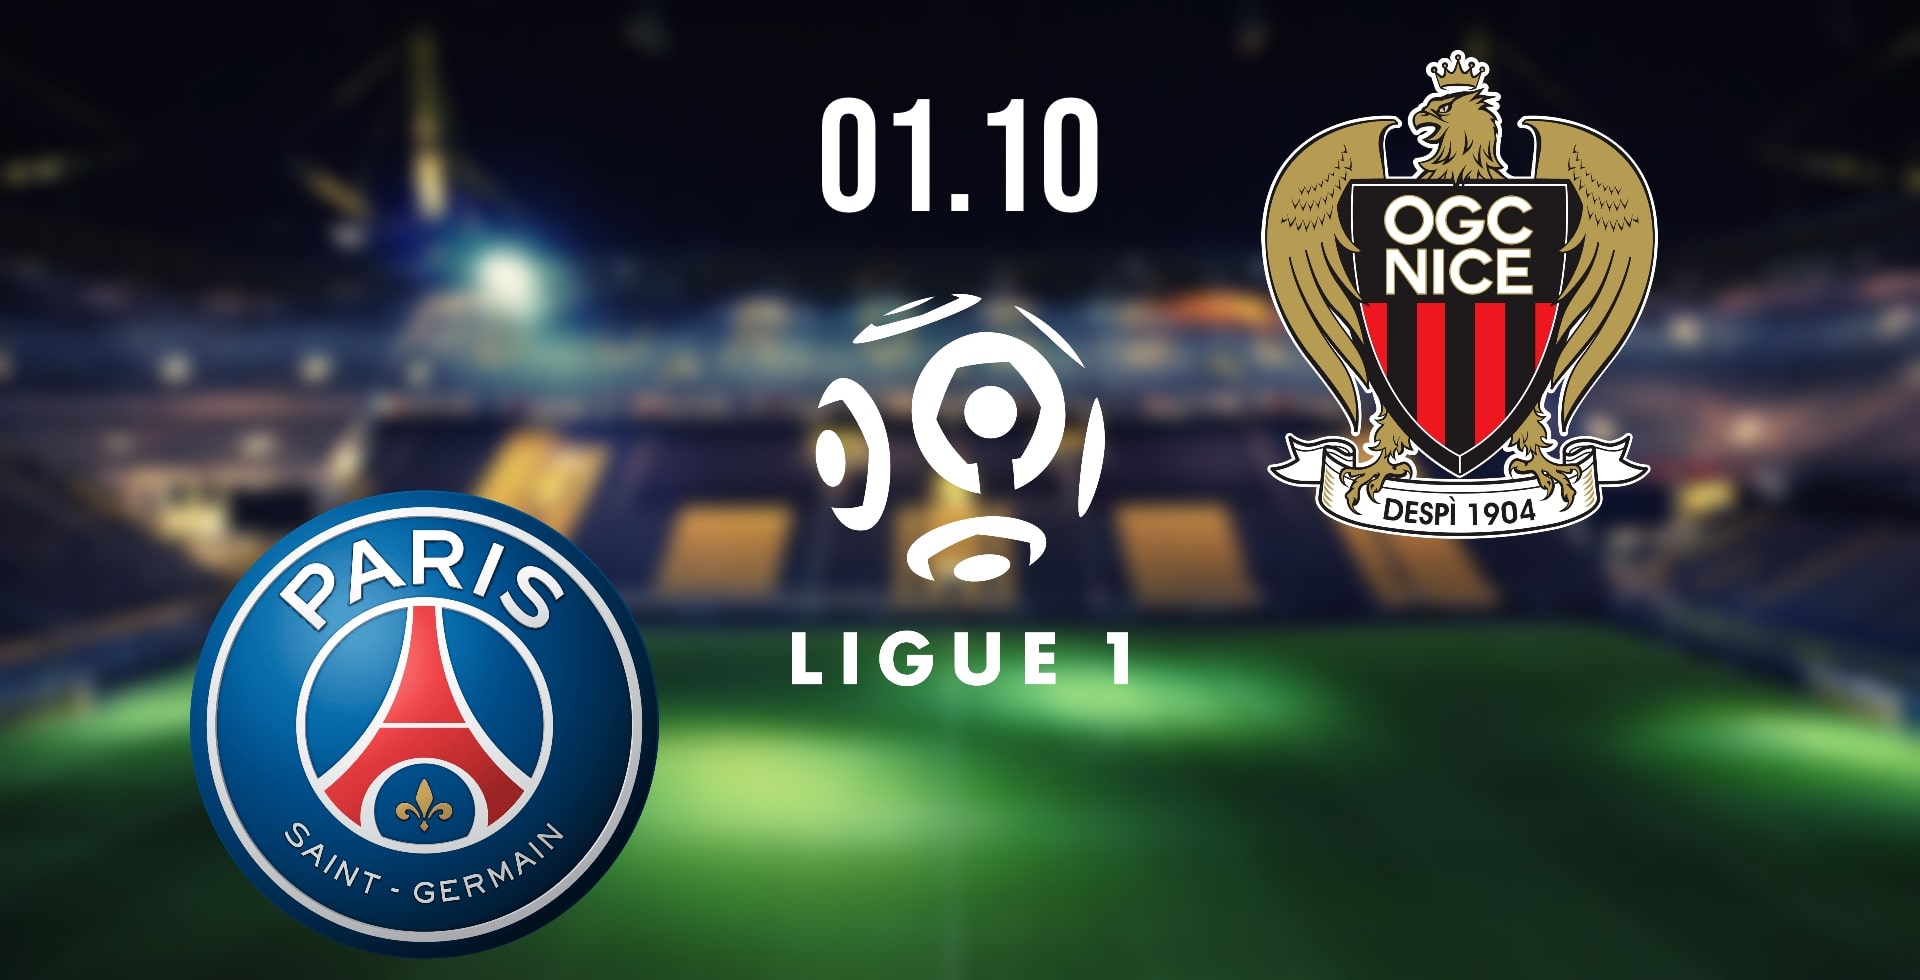 PSG vs Nice Prediction: Ligue 1 Match on 01.10.2022